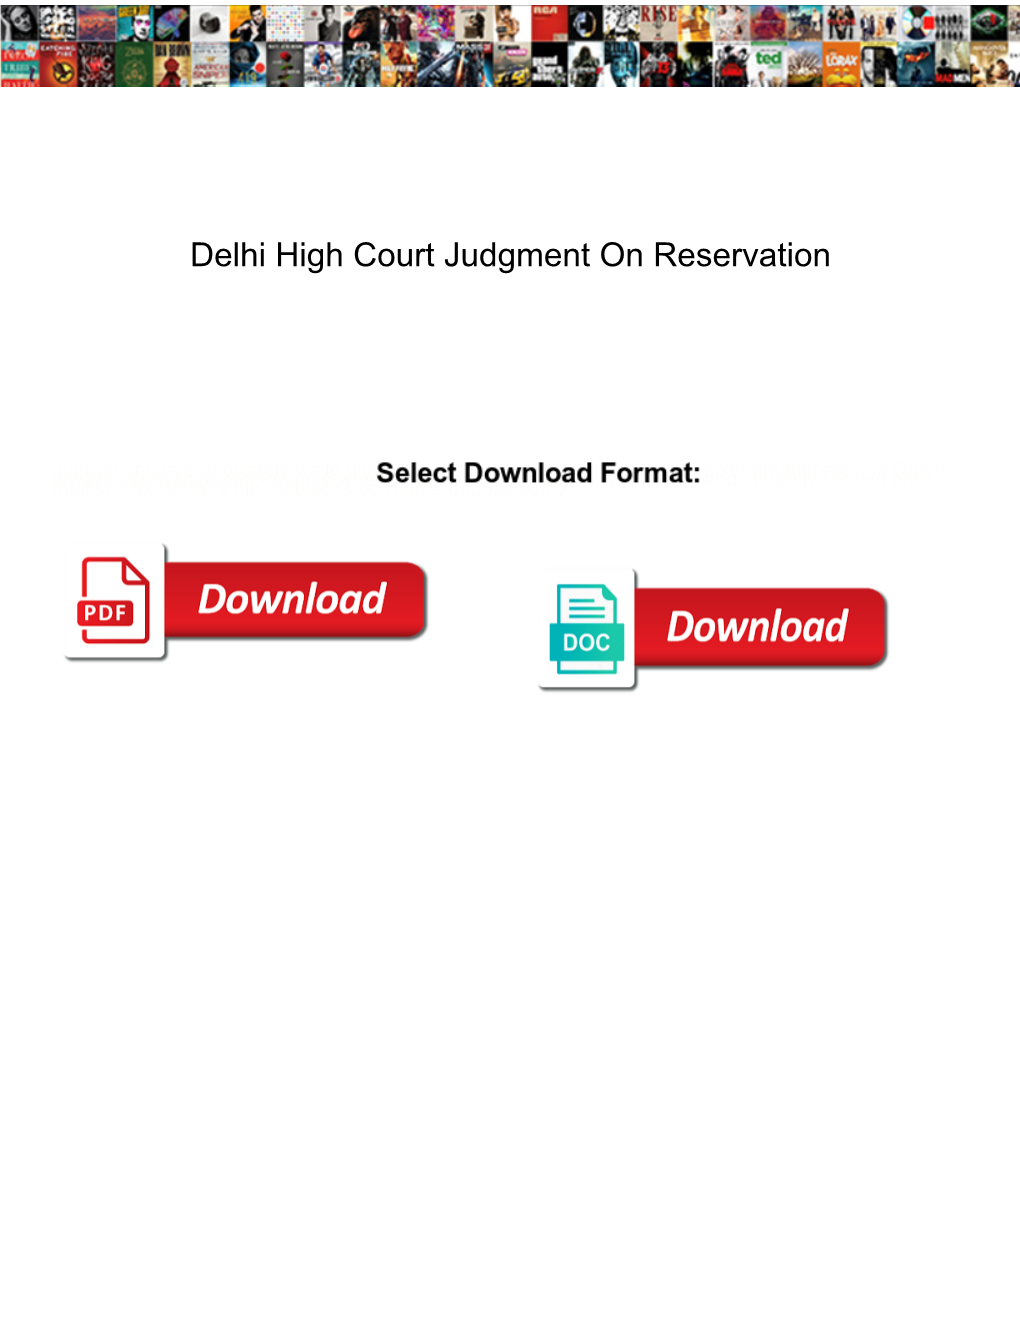 Delhi High Court Judgment on Reservation